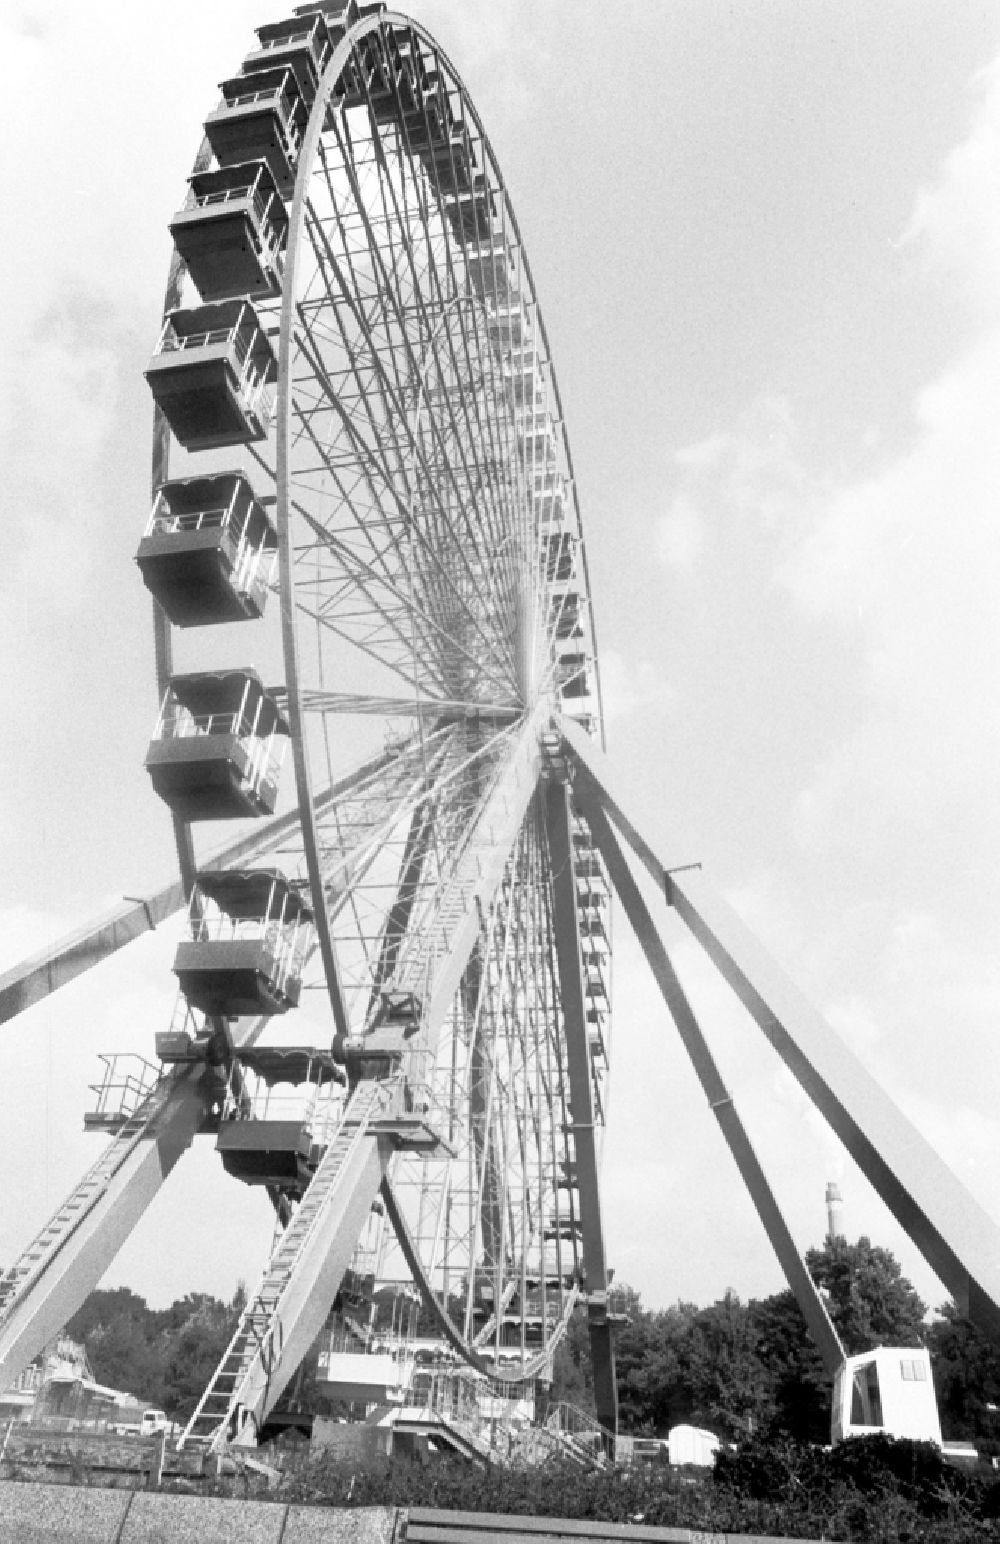 Berlin: Ferris wheel in the funfair Spreepark Plaenterwald in Berlin Rummelsburg, the former capital of the GDR, German Democratic Republic